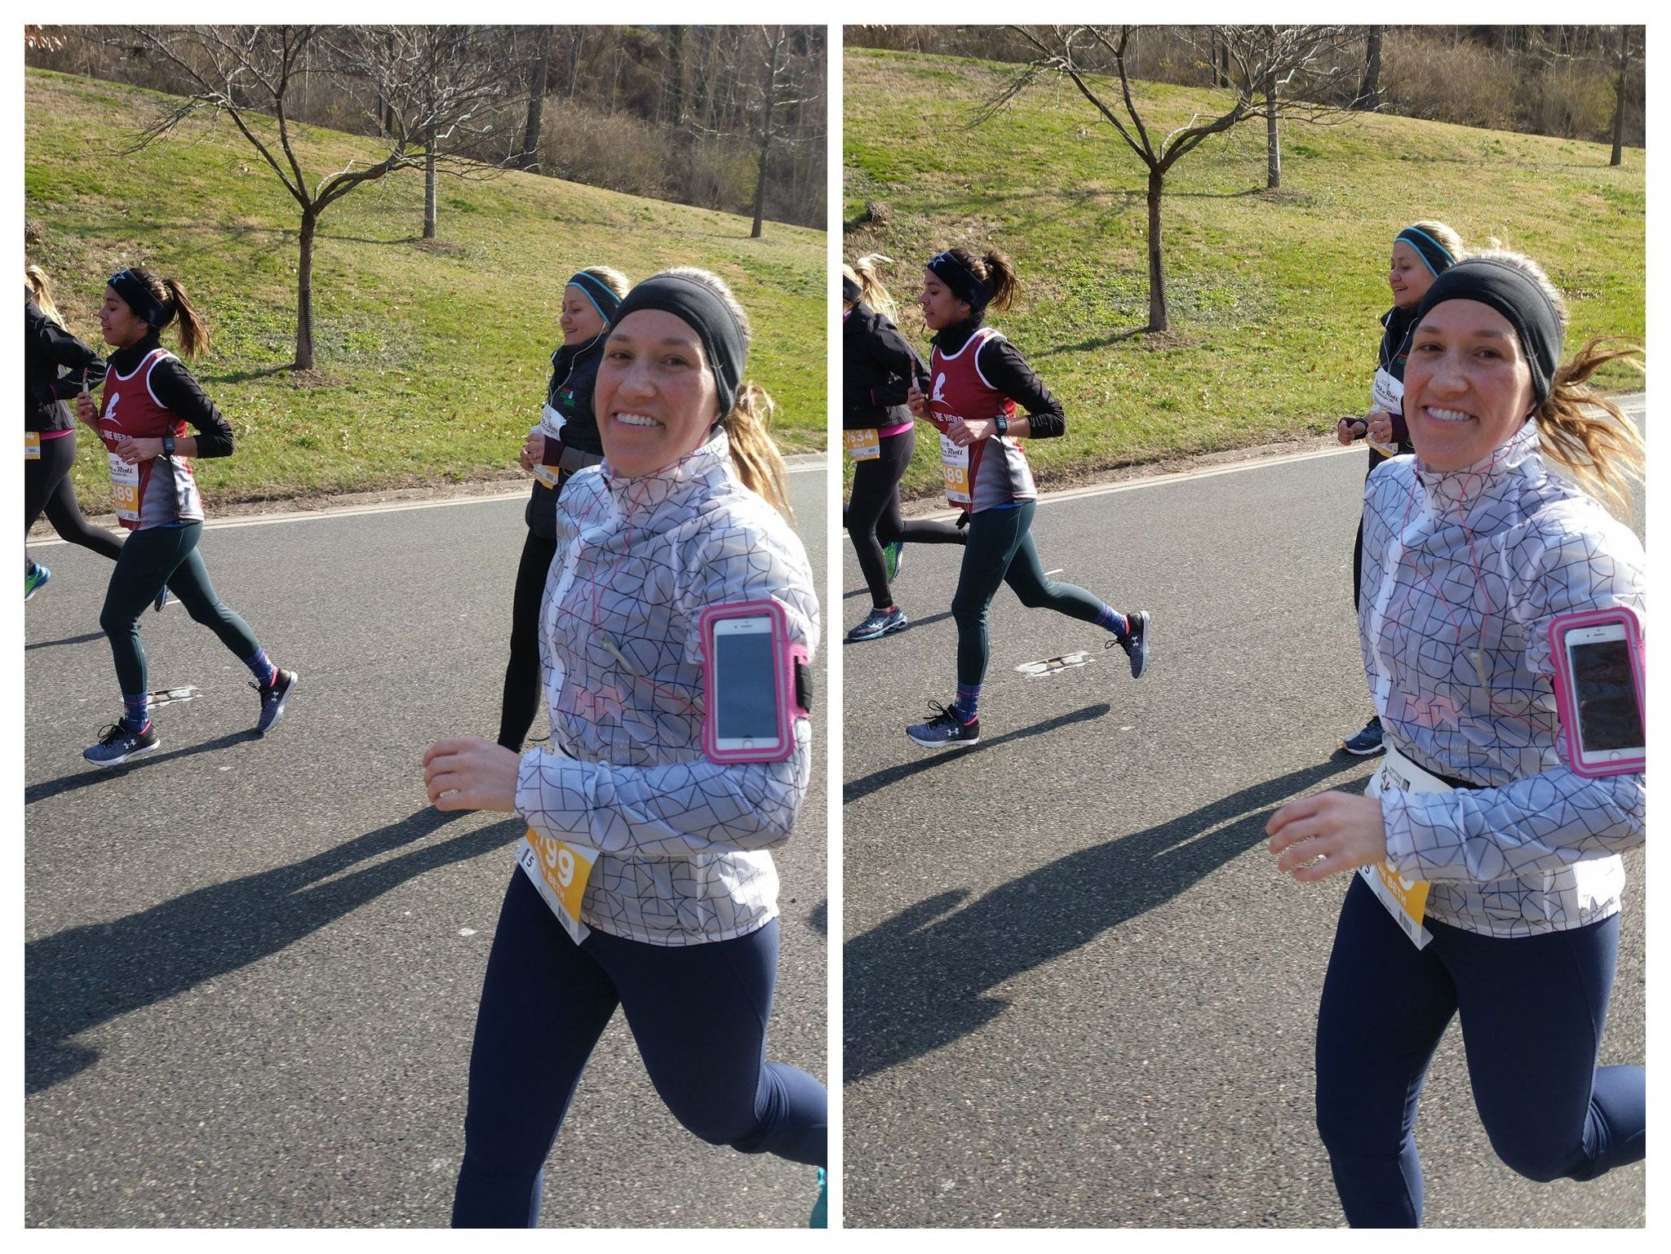 WTOP's own Sarah Beth Hensley runs in the 2018 Rock 'n' Roll Marathon in D.C. (WTOP/Brandon Millman)